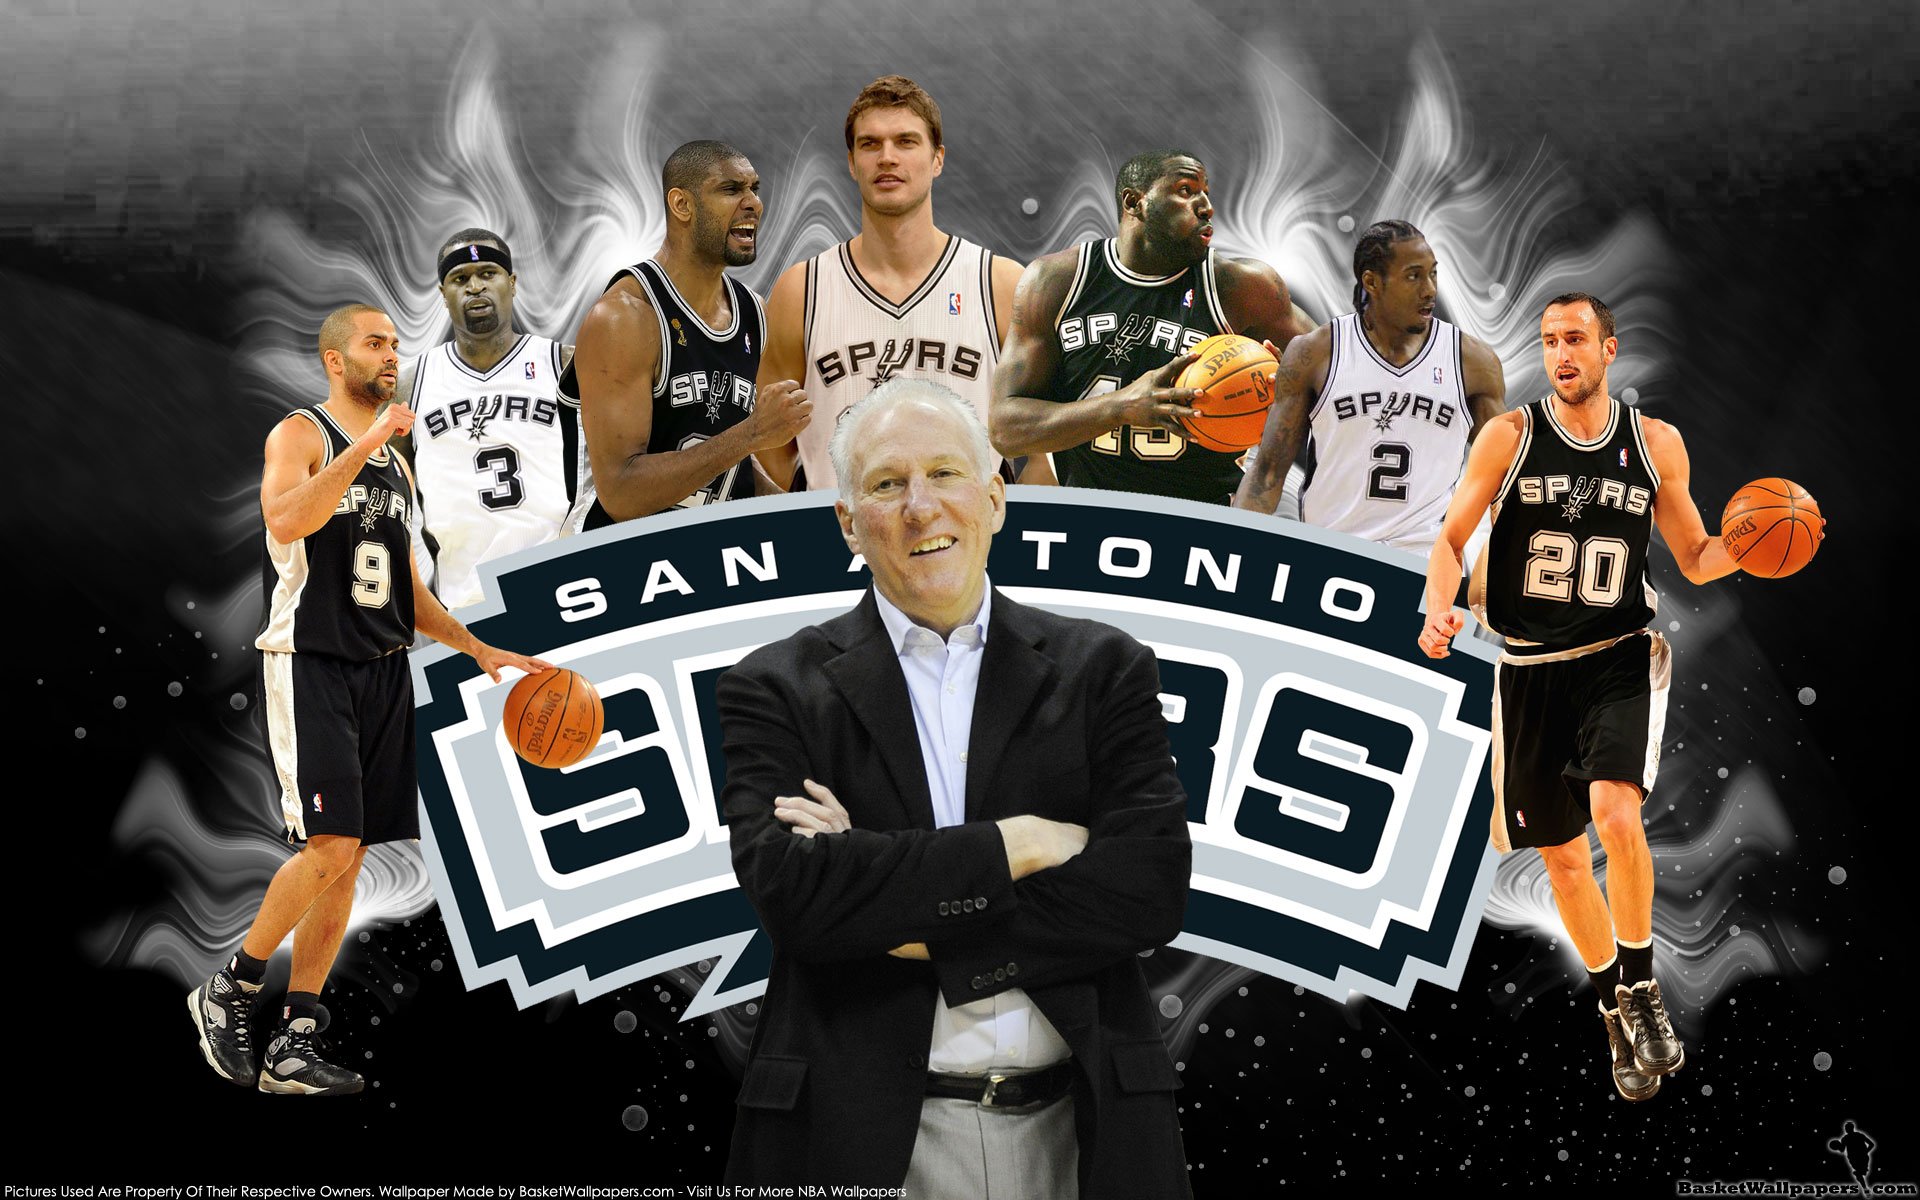  San Antonio Spurs desktop image San Antonio Spurs wallpapers 1920x1200